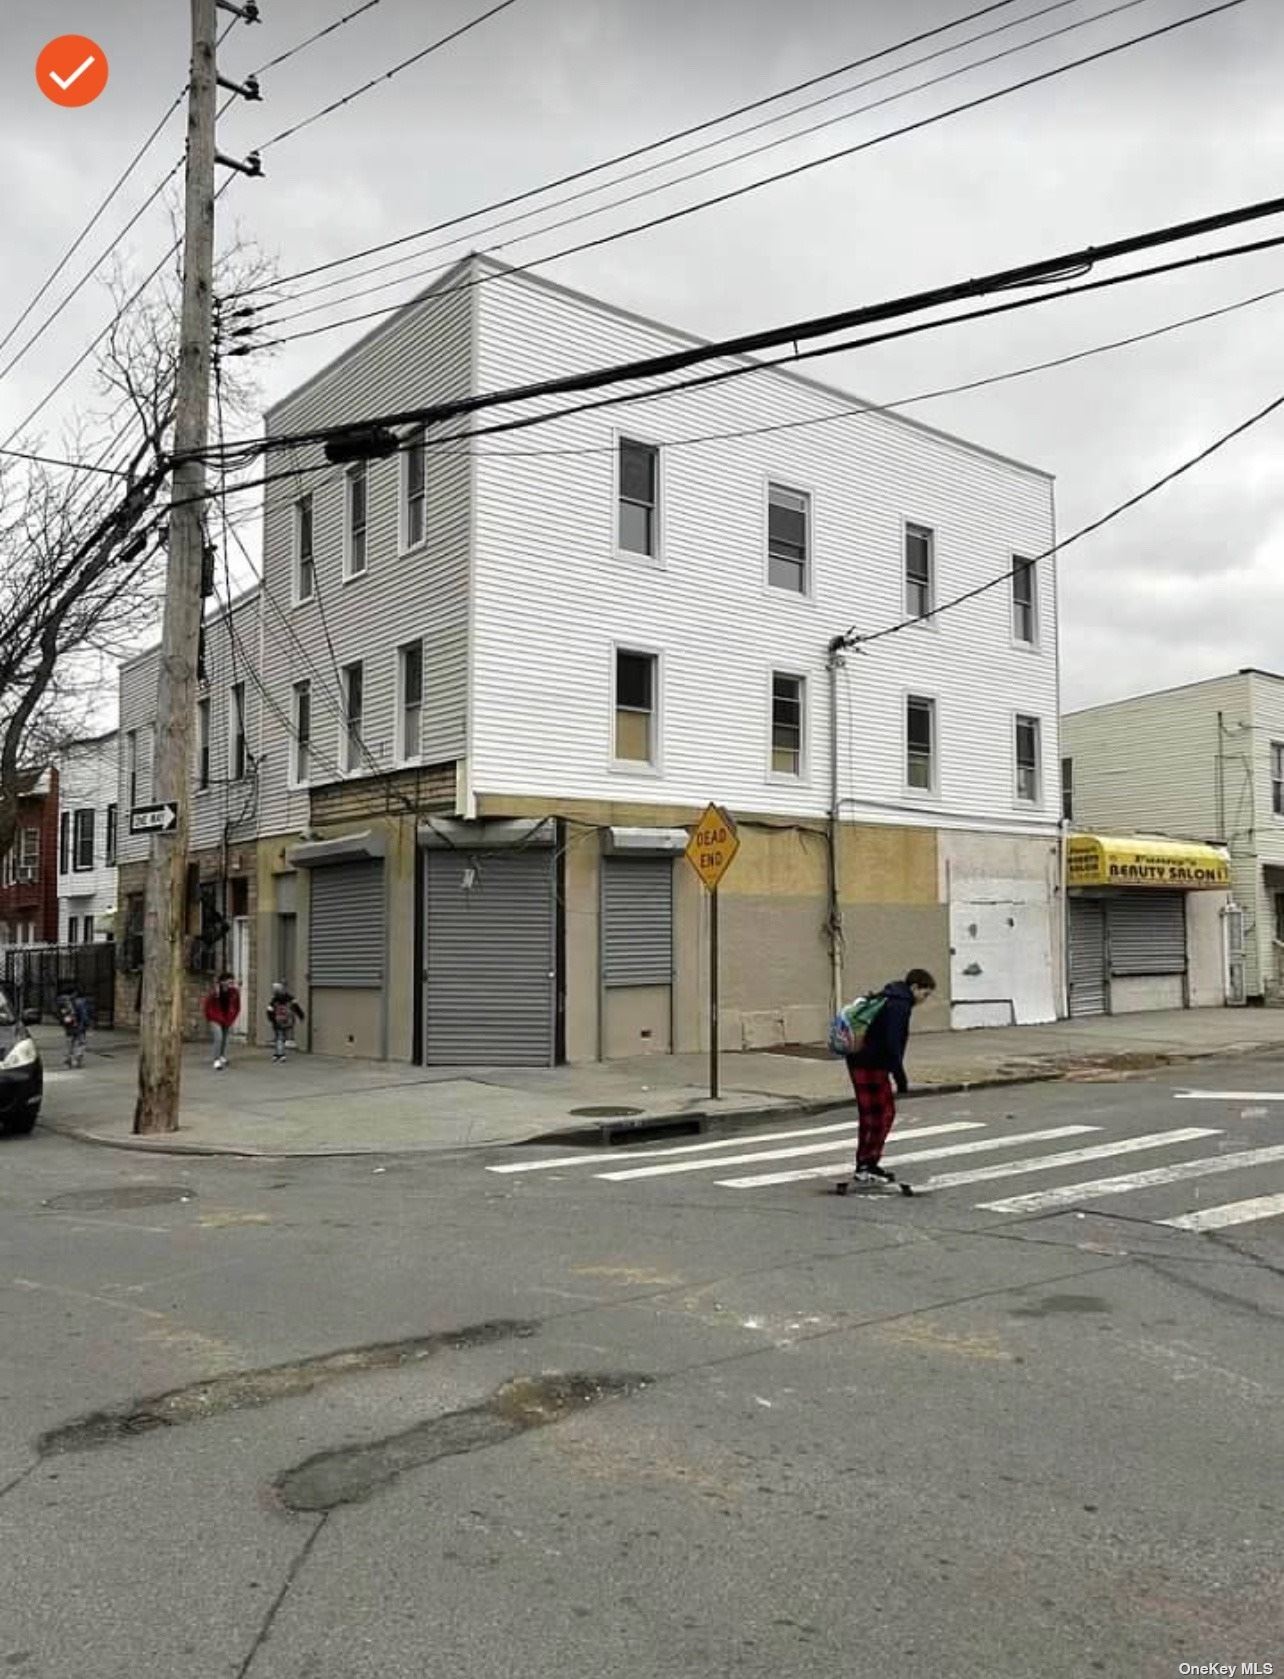 Property for Sale at 524 Van Nest Avenue, Bronx, New York - Bedrooms: 6 
Bathrooms: 3 
Rooms: 15  - $1,180,000